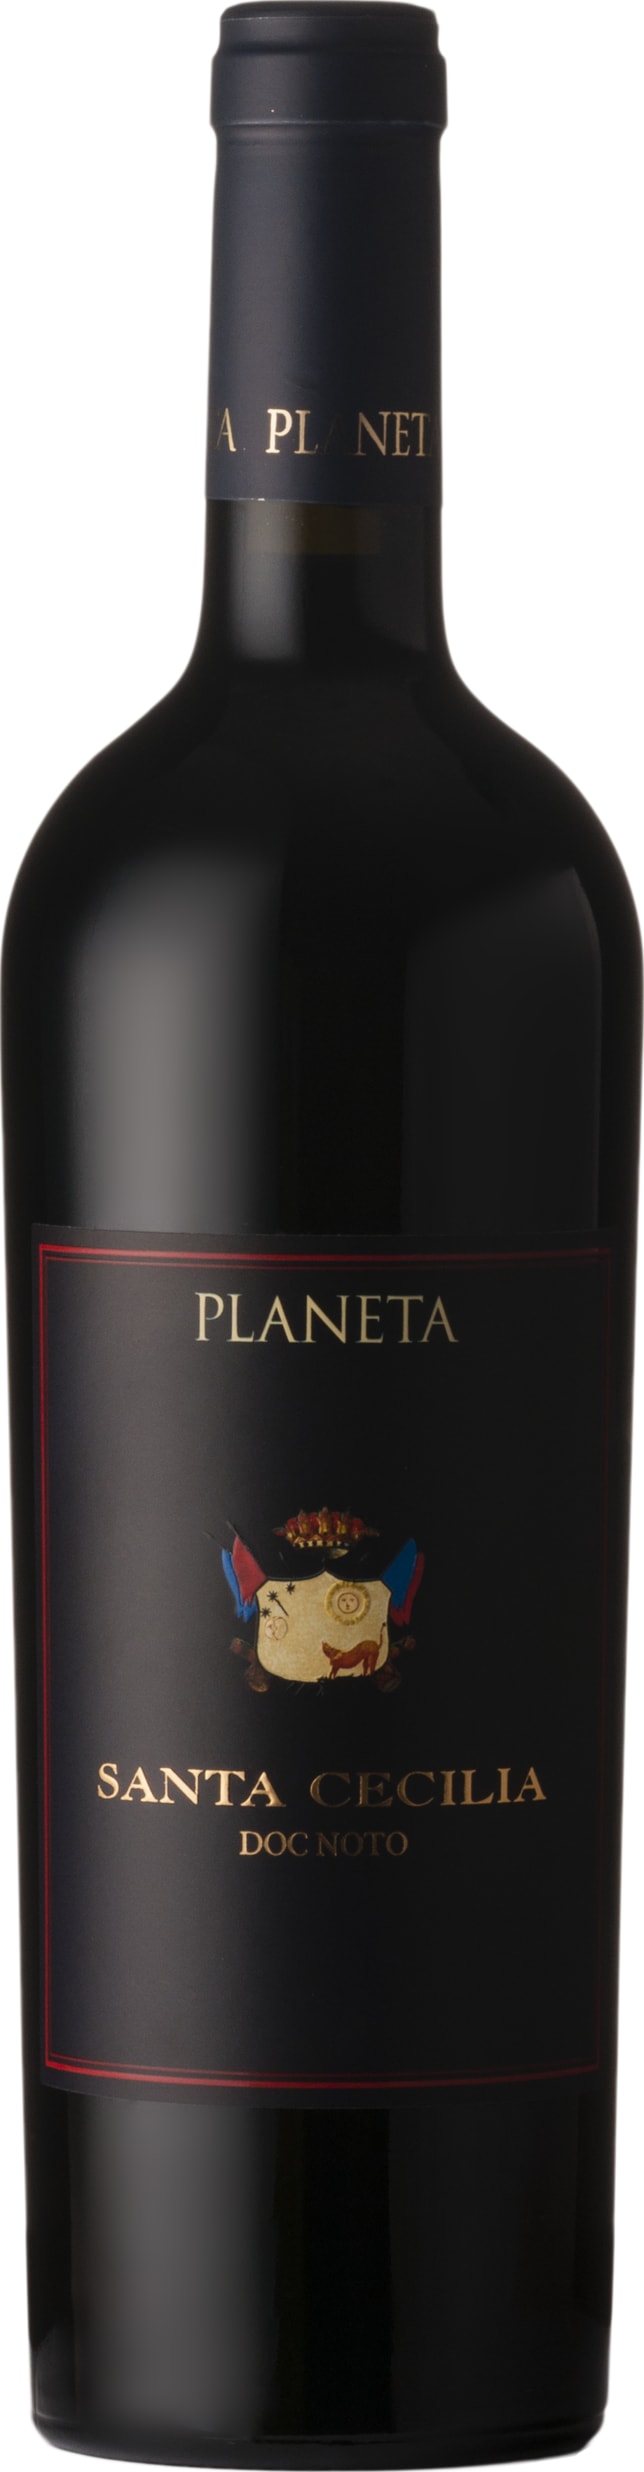 Planeta Santa Cecilia 2020 75cl - Buy Planeta Wines from GREAT WINES DIRECT wine shop